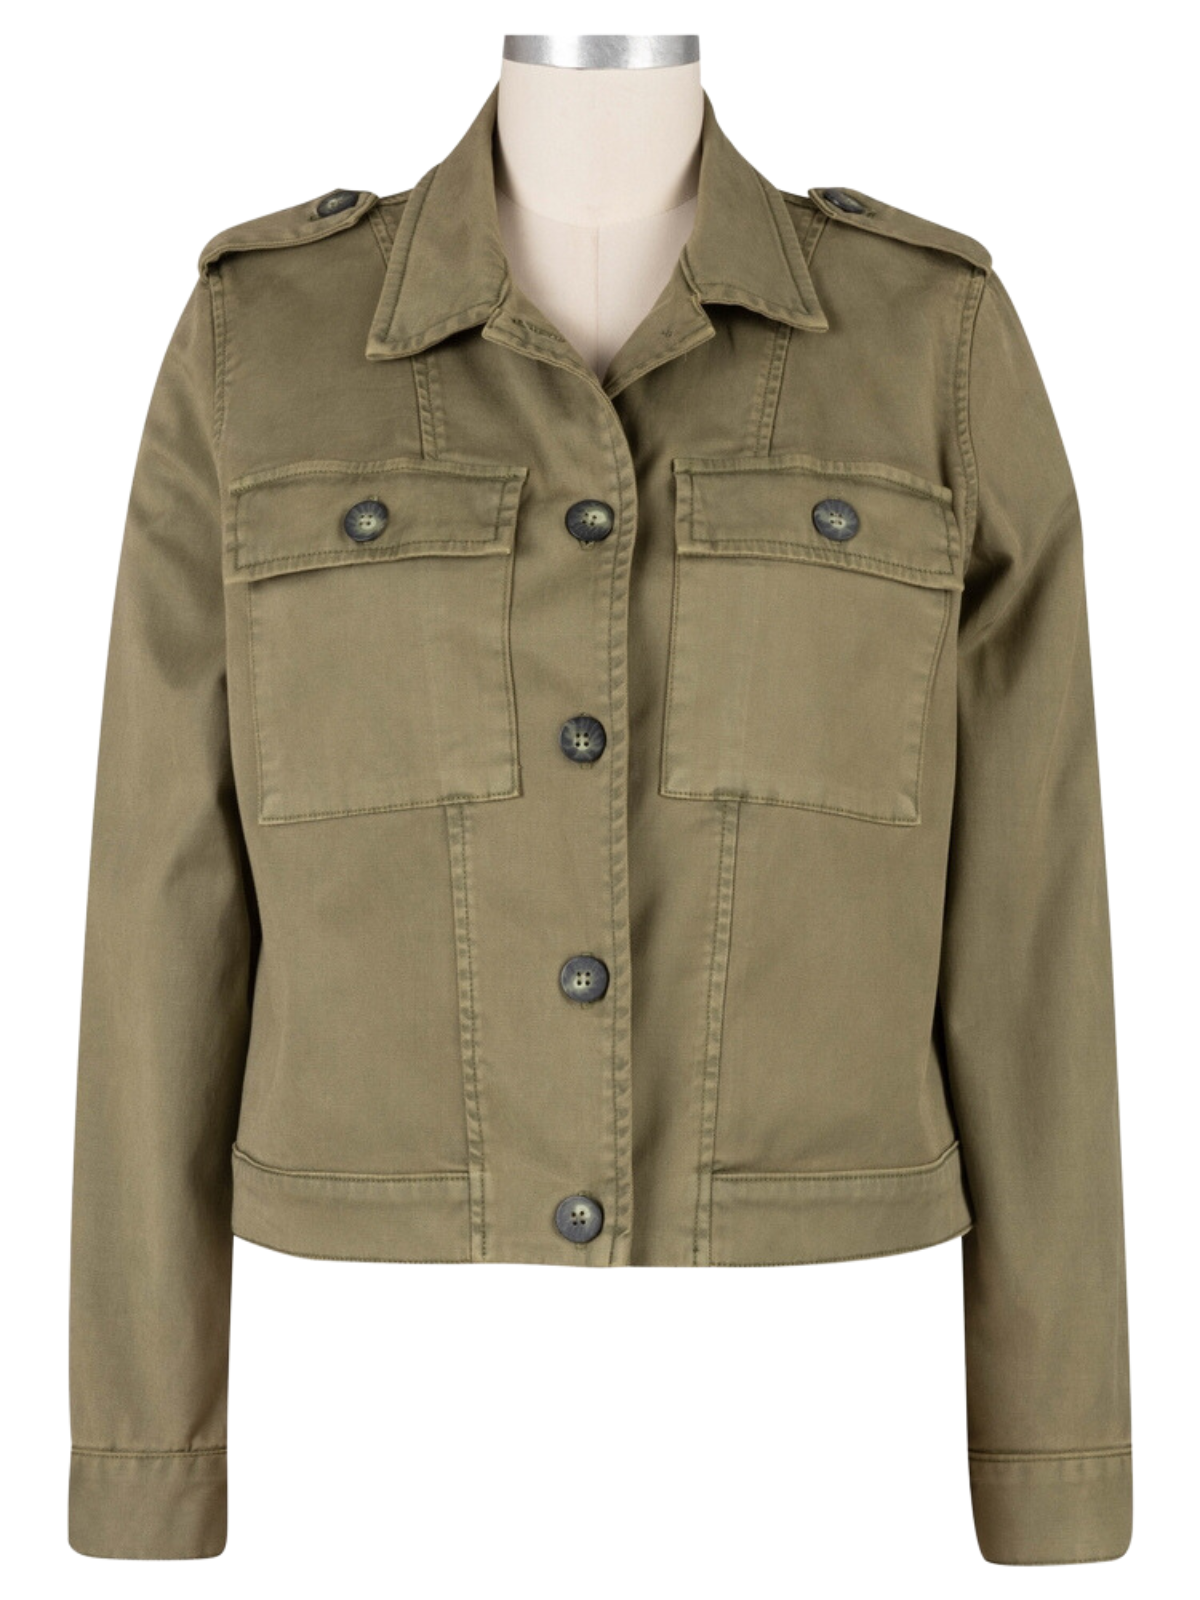 Buy Levi's Olive Denim Jacket for Women's Online @ Tata CLiQ